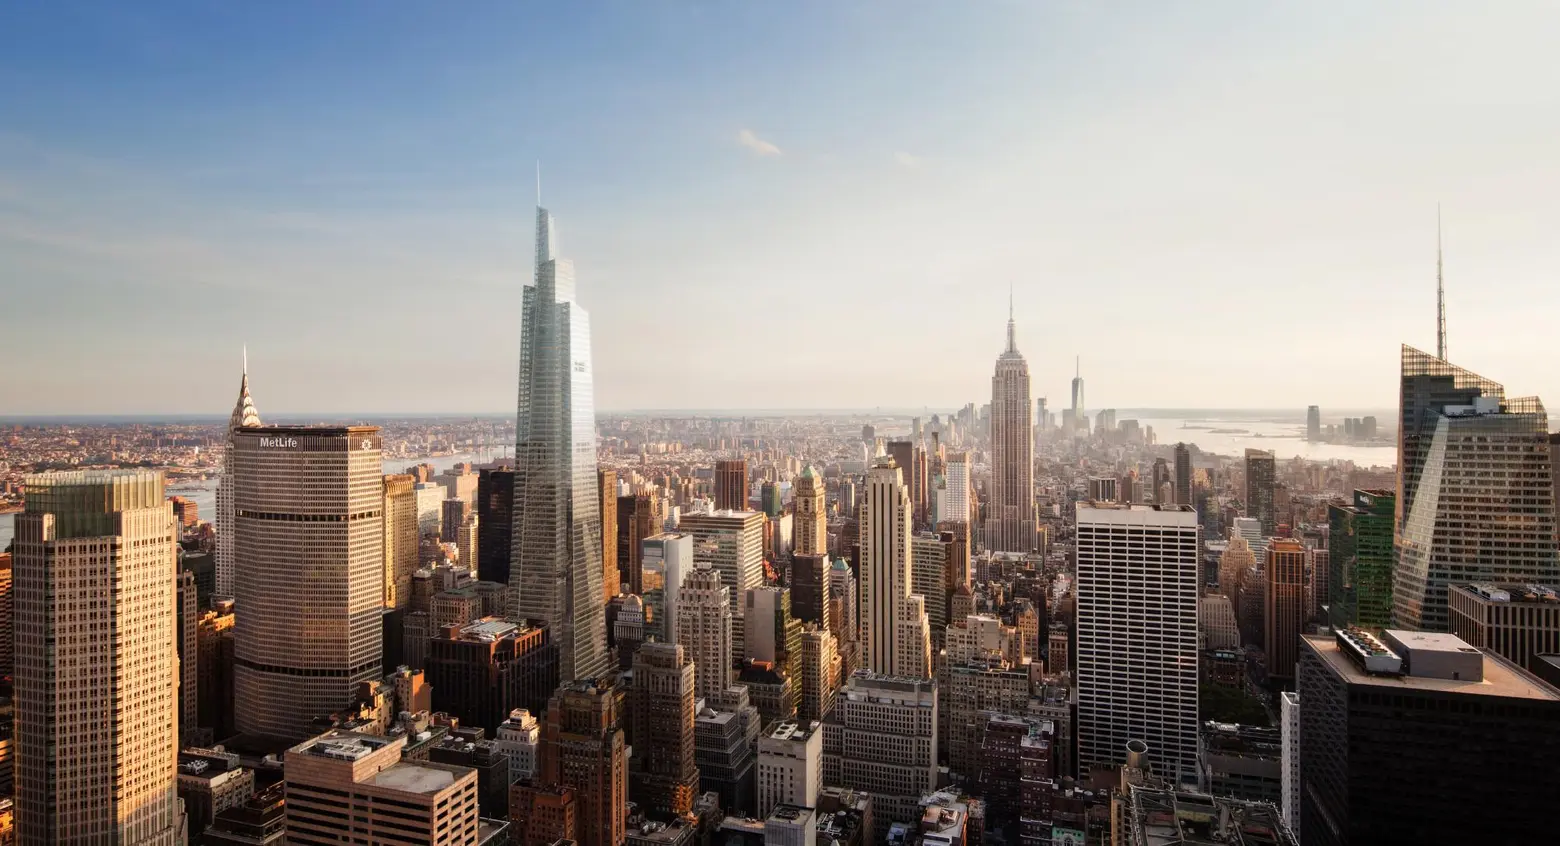 One Vanderbilt’s outdoor observation deck may tie for highest in NYC